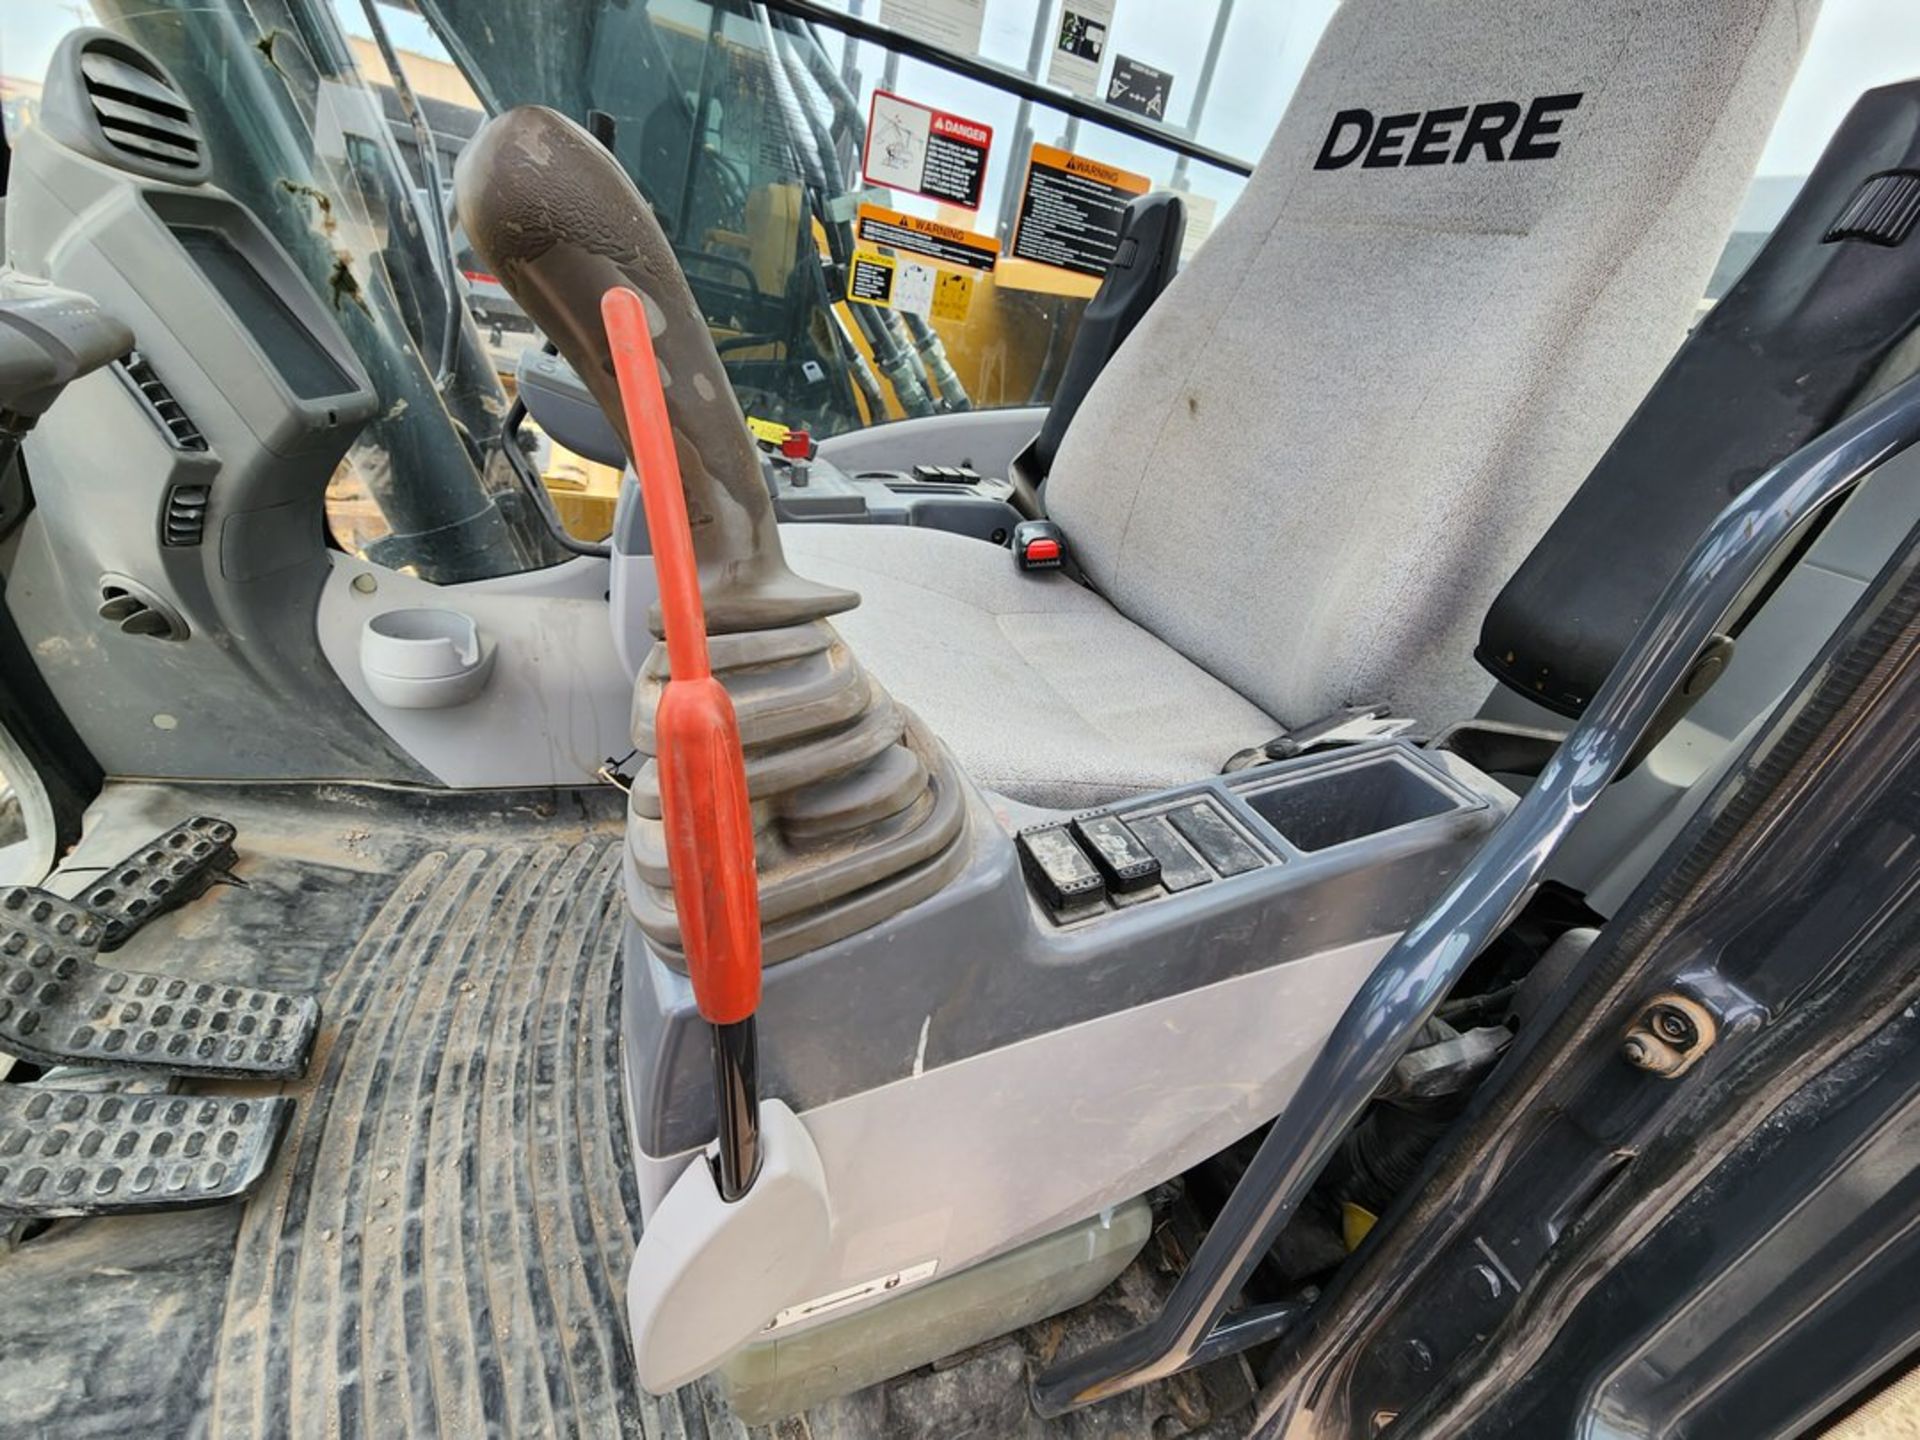 2017 John Deere 130G Excavator 102" Blade Attachment; W/ 17"W Bucket - Image 28 of 32